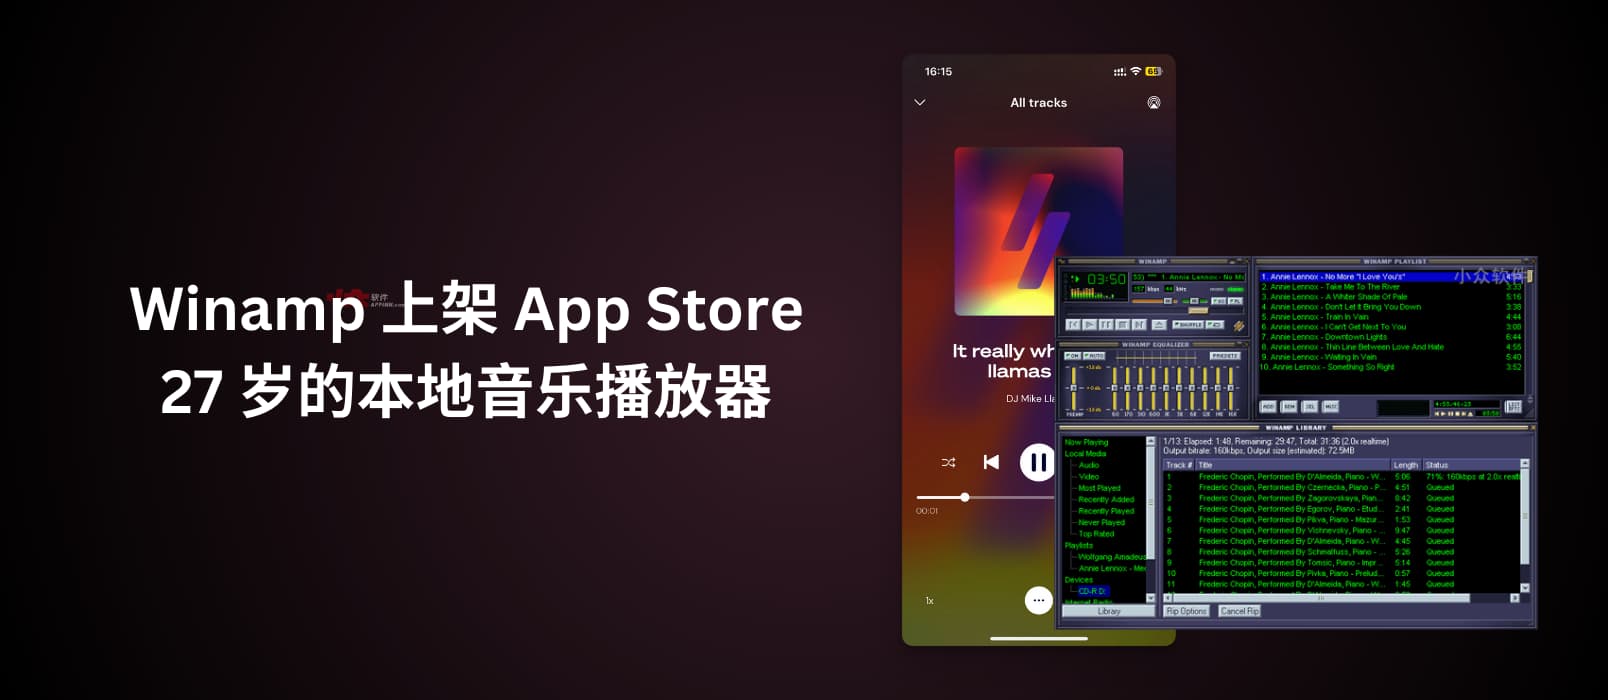 Winamp 正式上架 App Store，27 岁的本地音乐播放器，没有更换皮肤功能 1